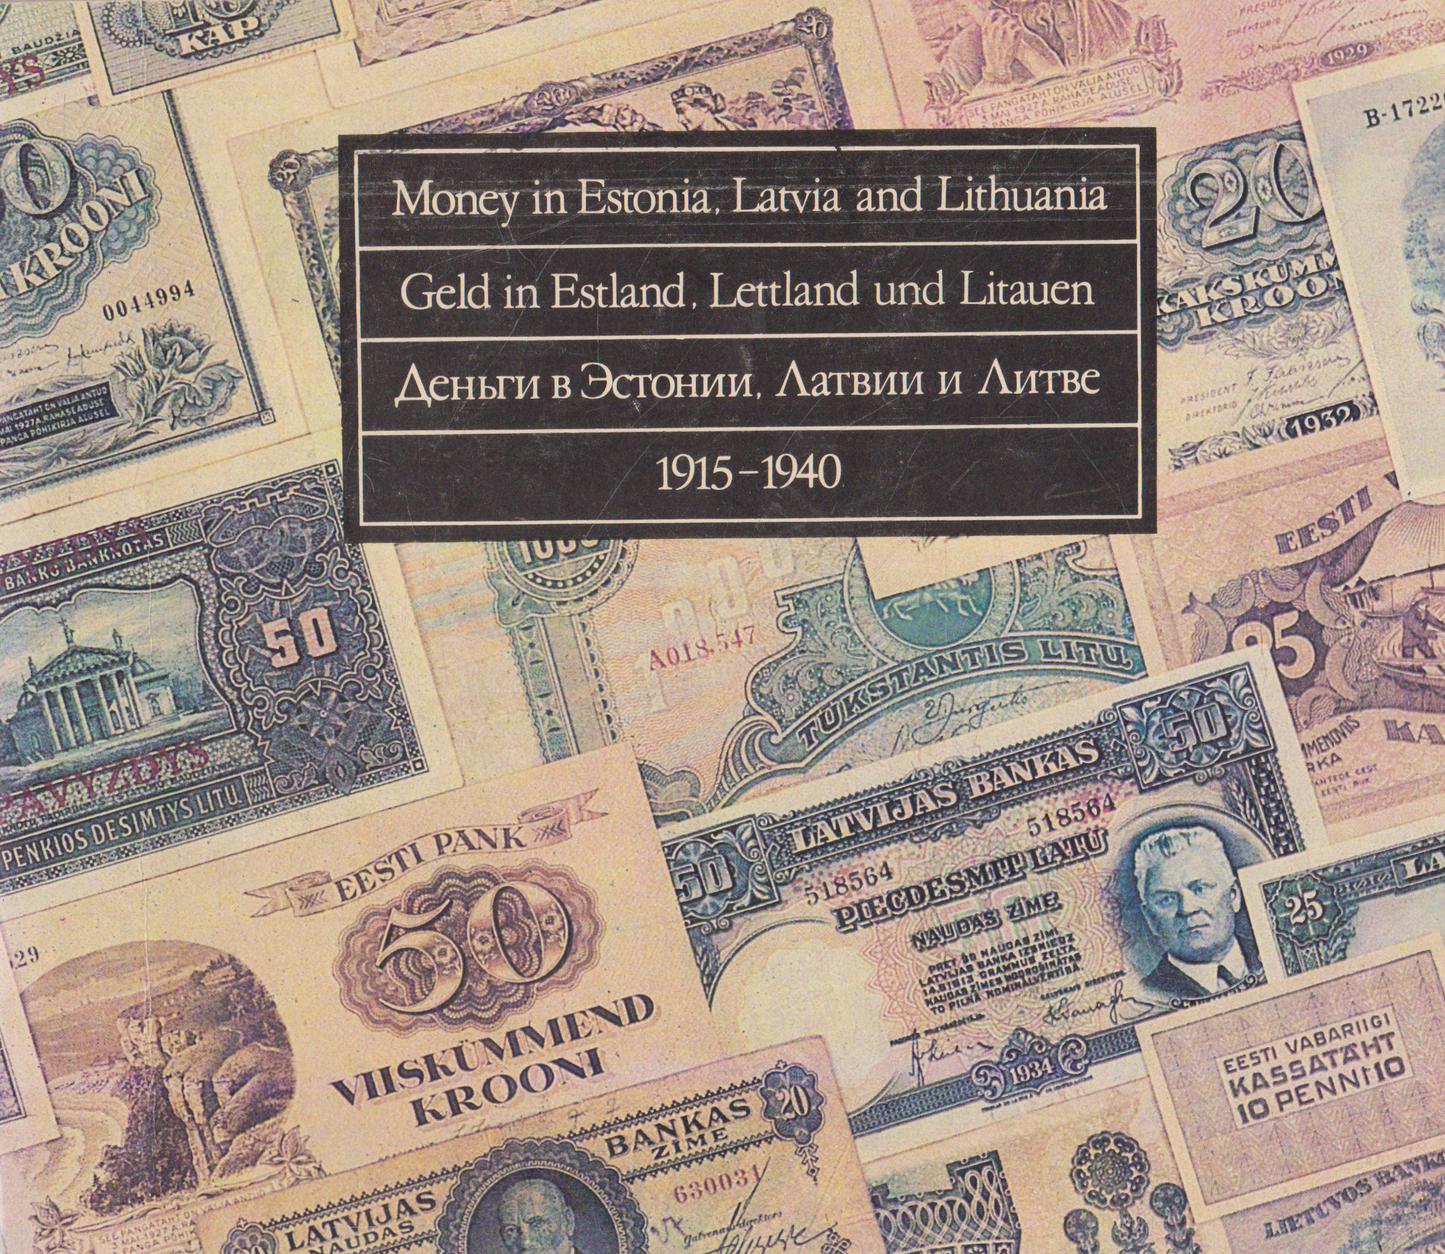 Money in Estonia, Latvia and Lithuania 1915-1940